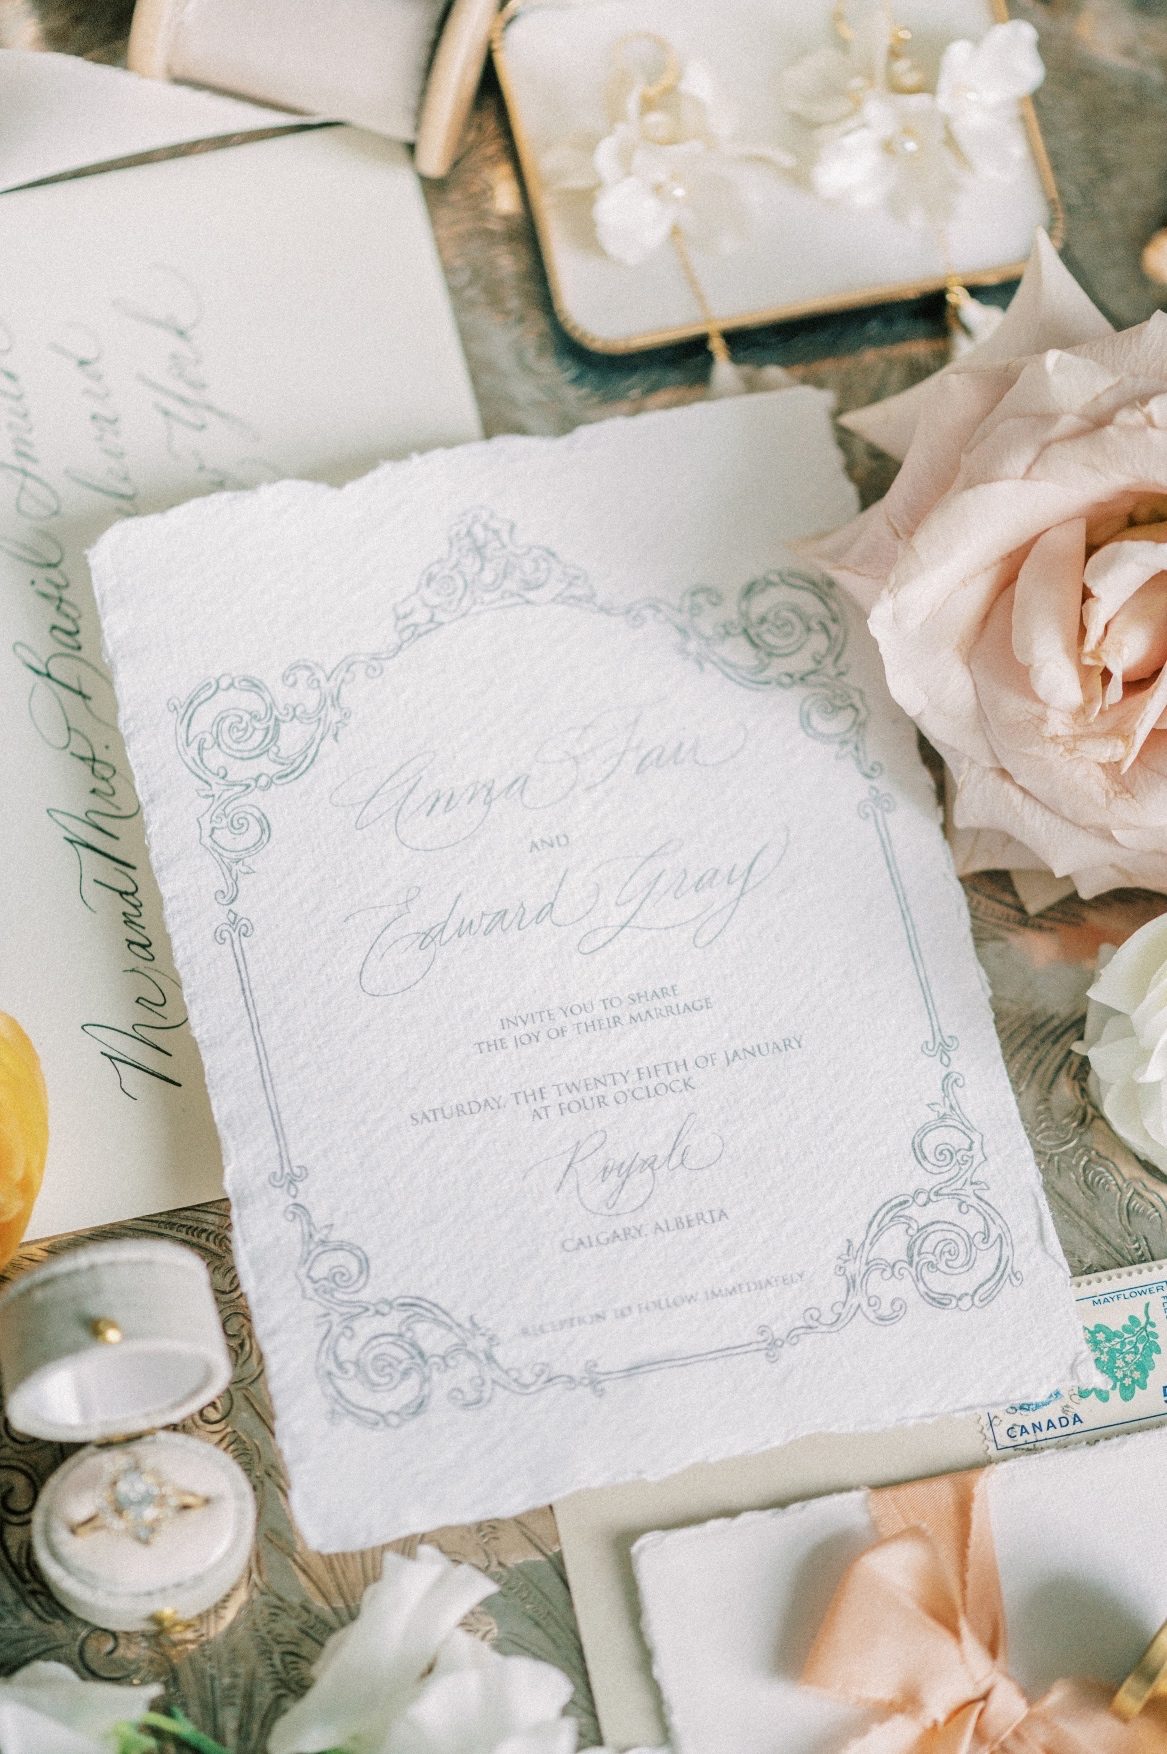 A close up of the beautiful wedding invitation